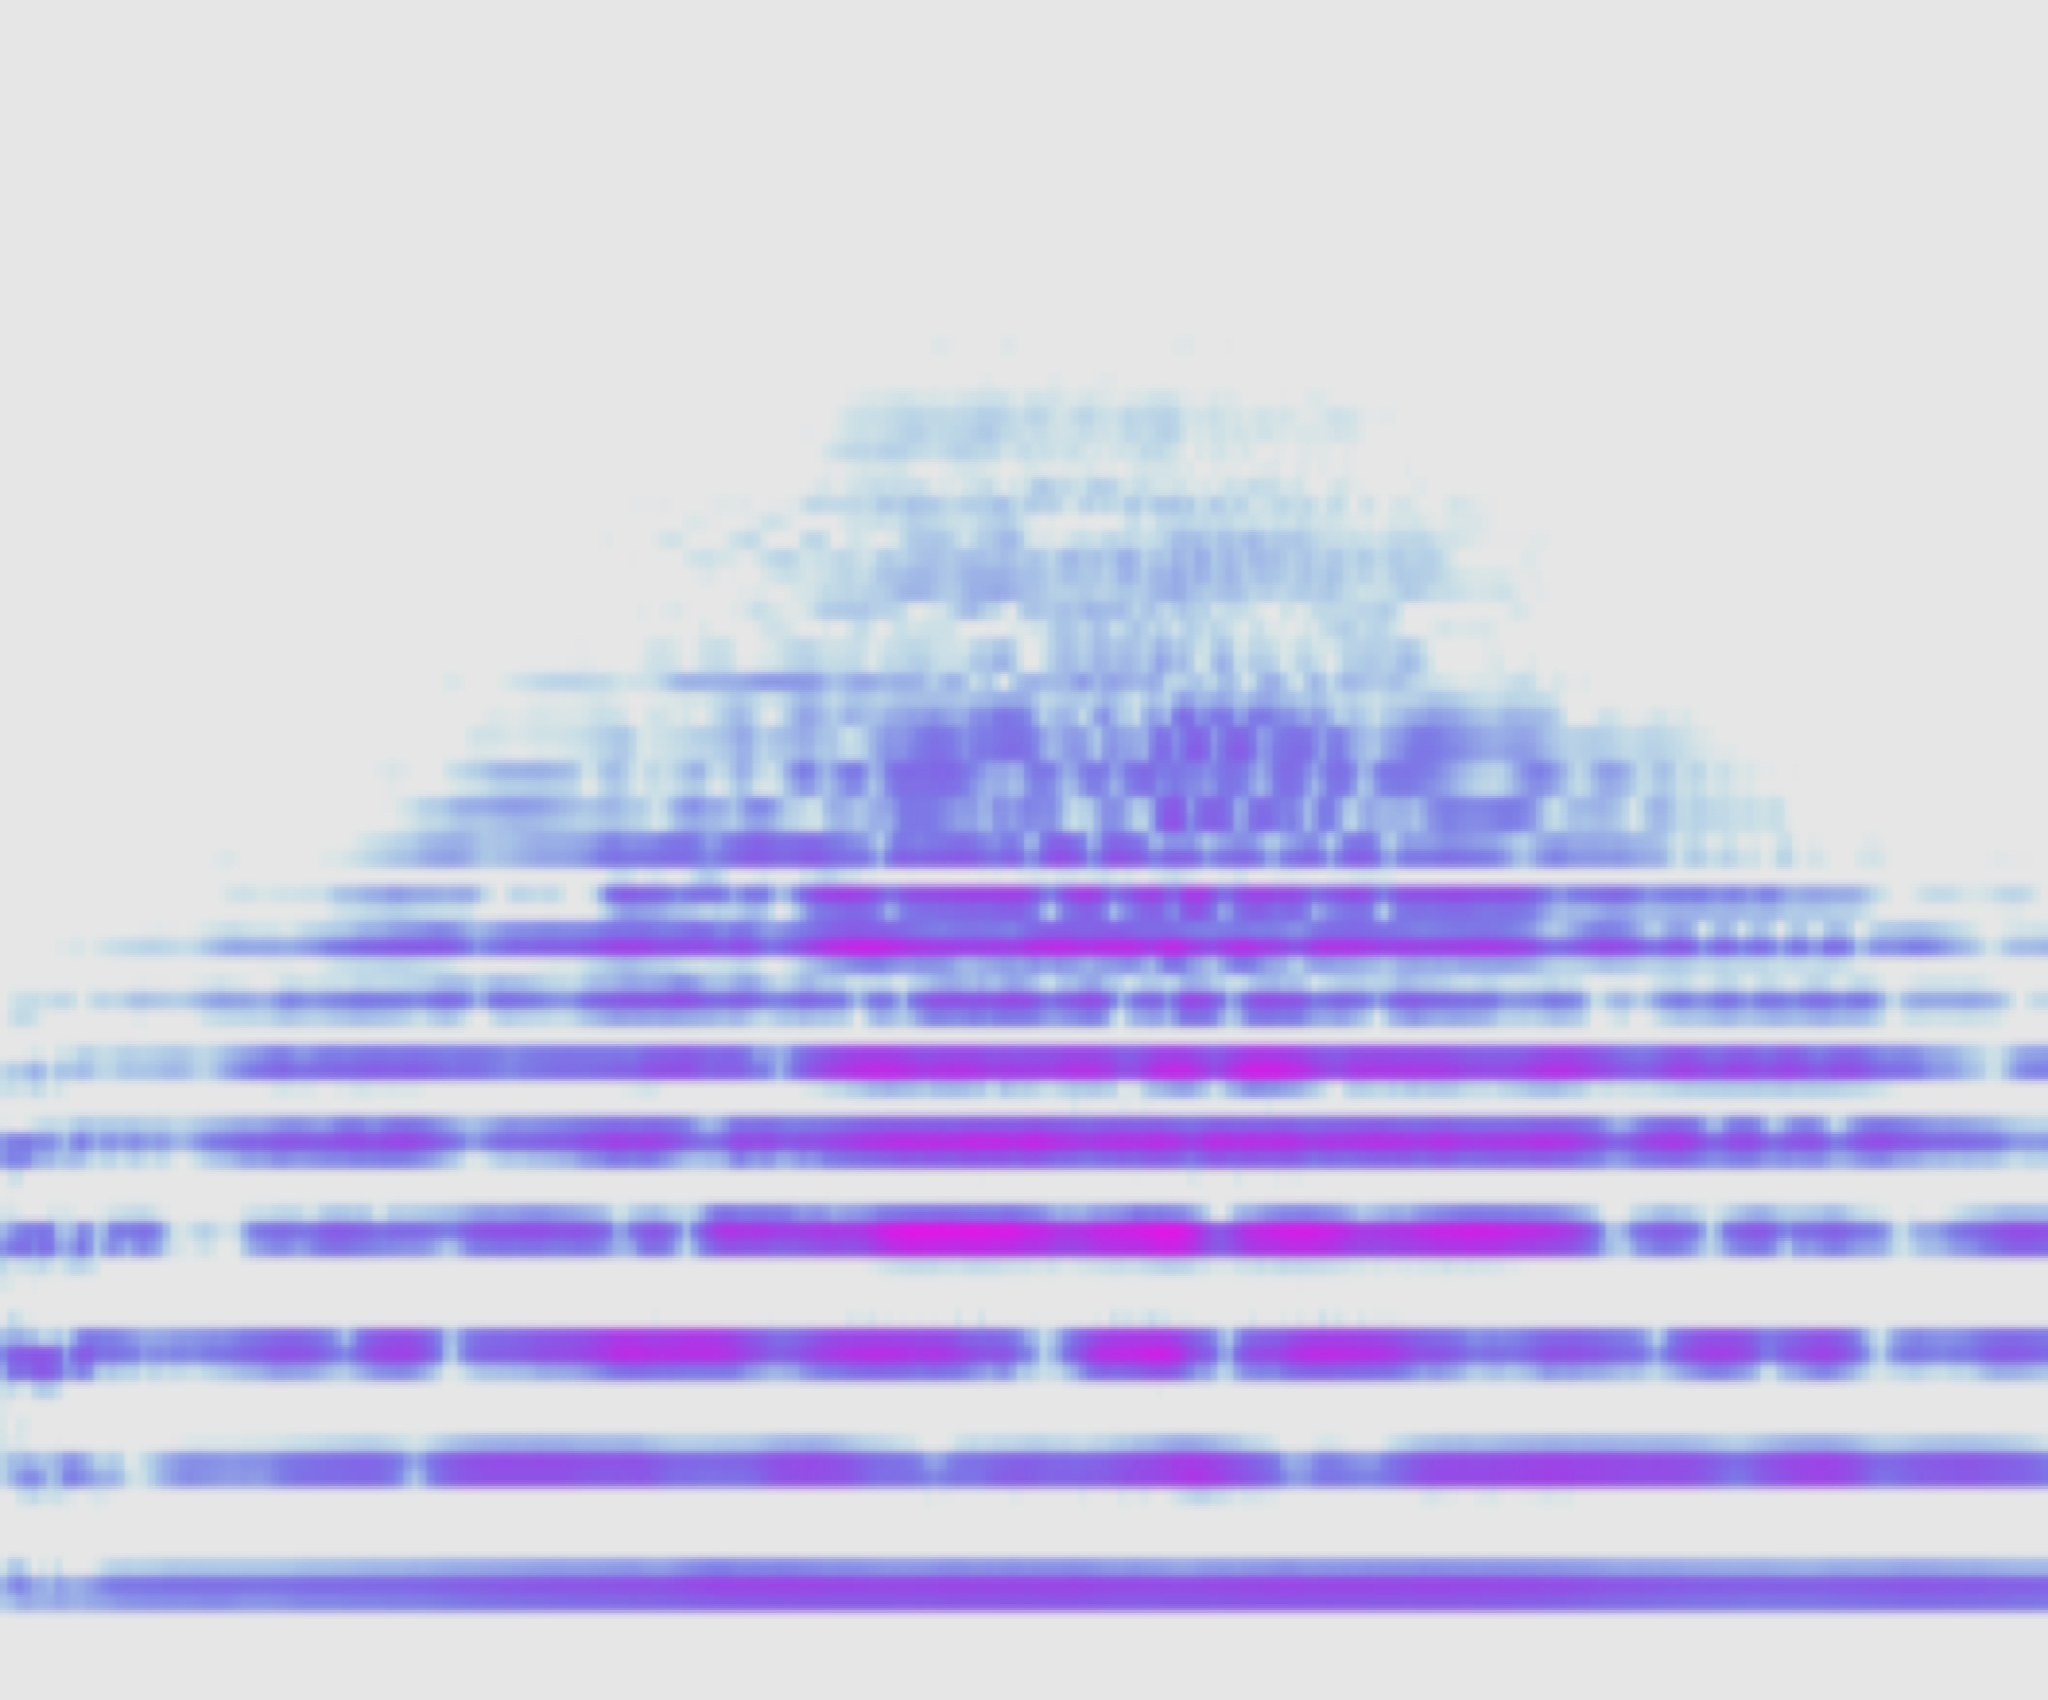 image of audio signal